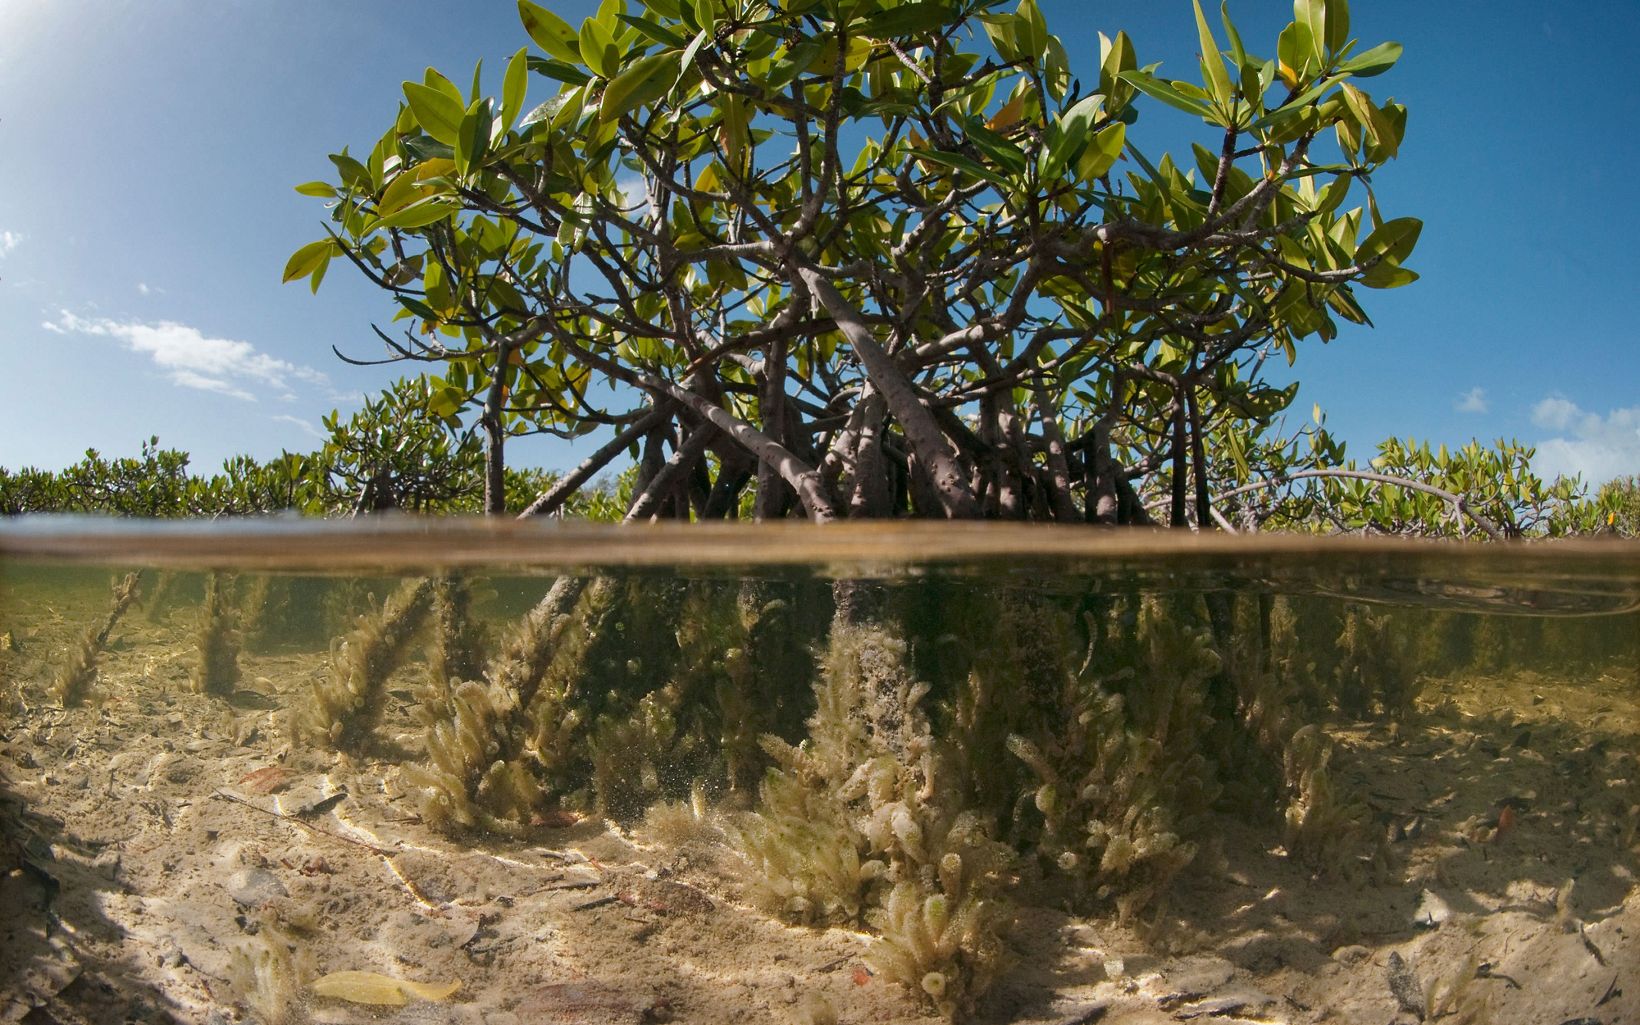 Mangrove in the shallow coastal salt flats of Warderick Wells Cay in the Bahamas Exuma Cays Land & Sea Park.